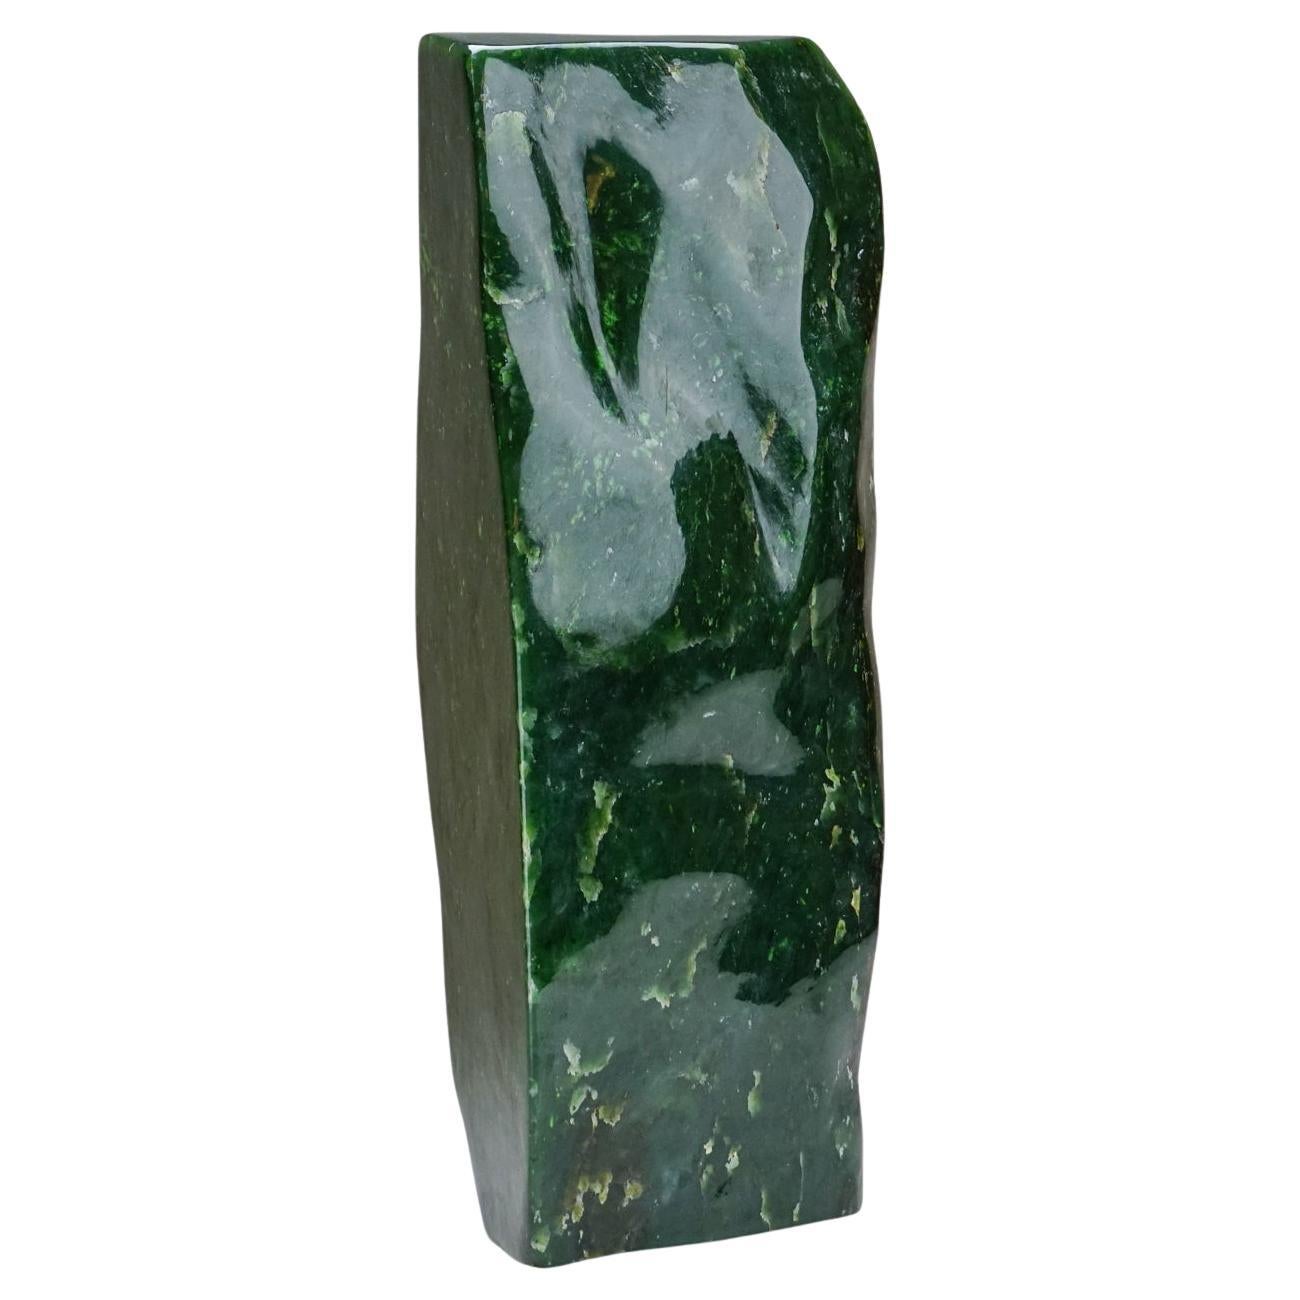 Polished Nephrite Jade Freeform from Pakistan '20.8 Lbs'